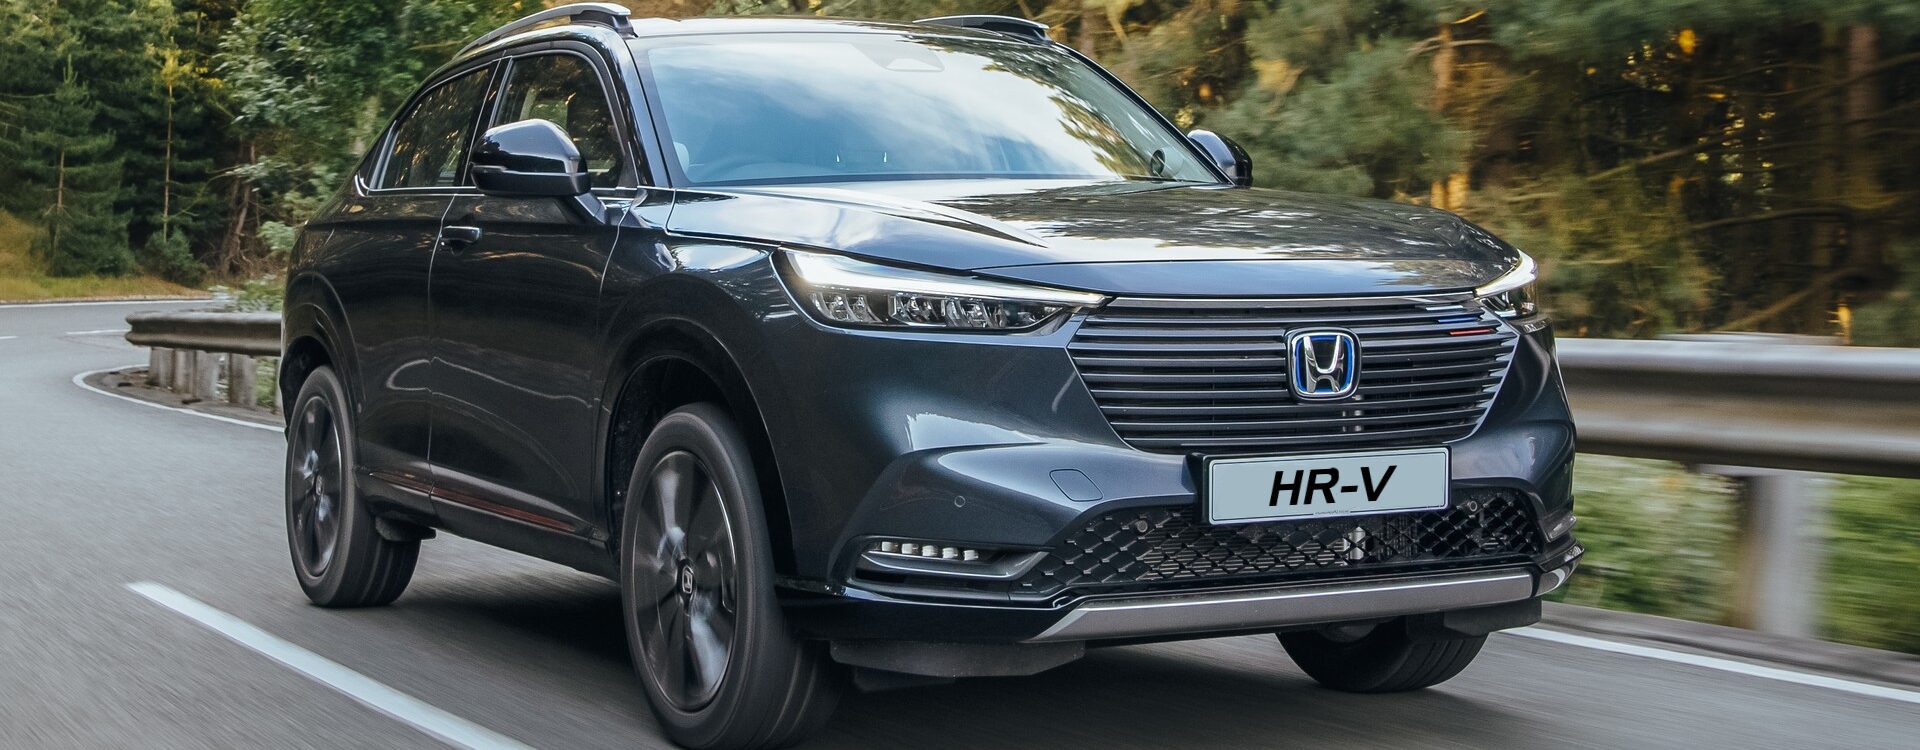 De nieuwe Honda HR-V e:HEV - ontdek hem hier